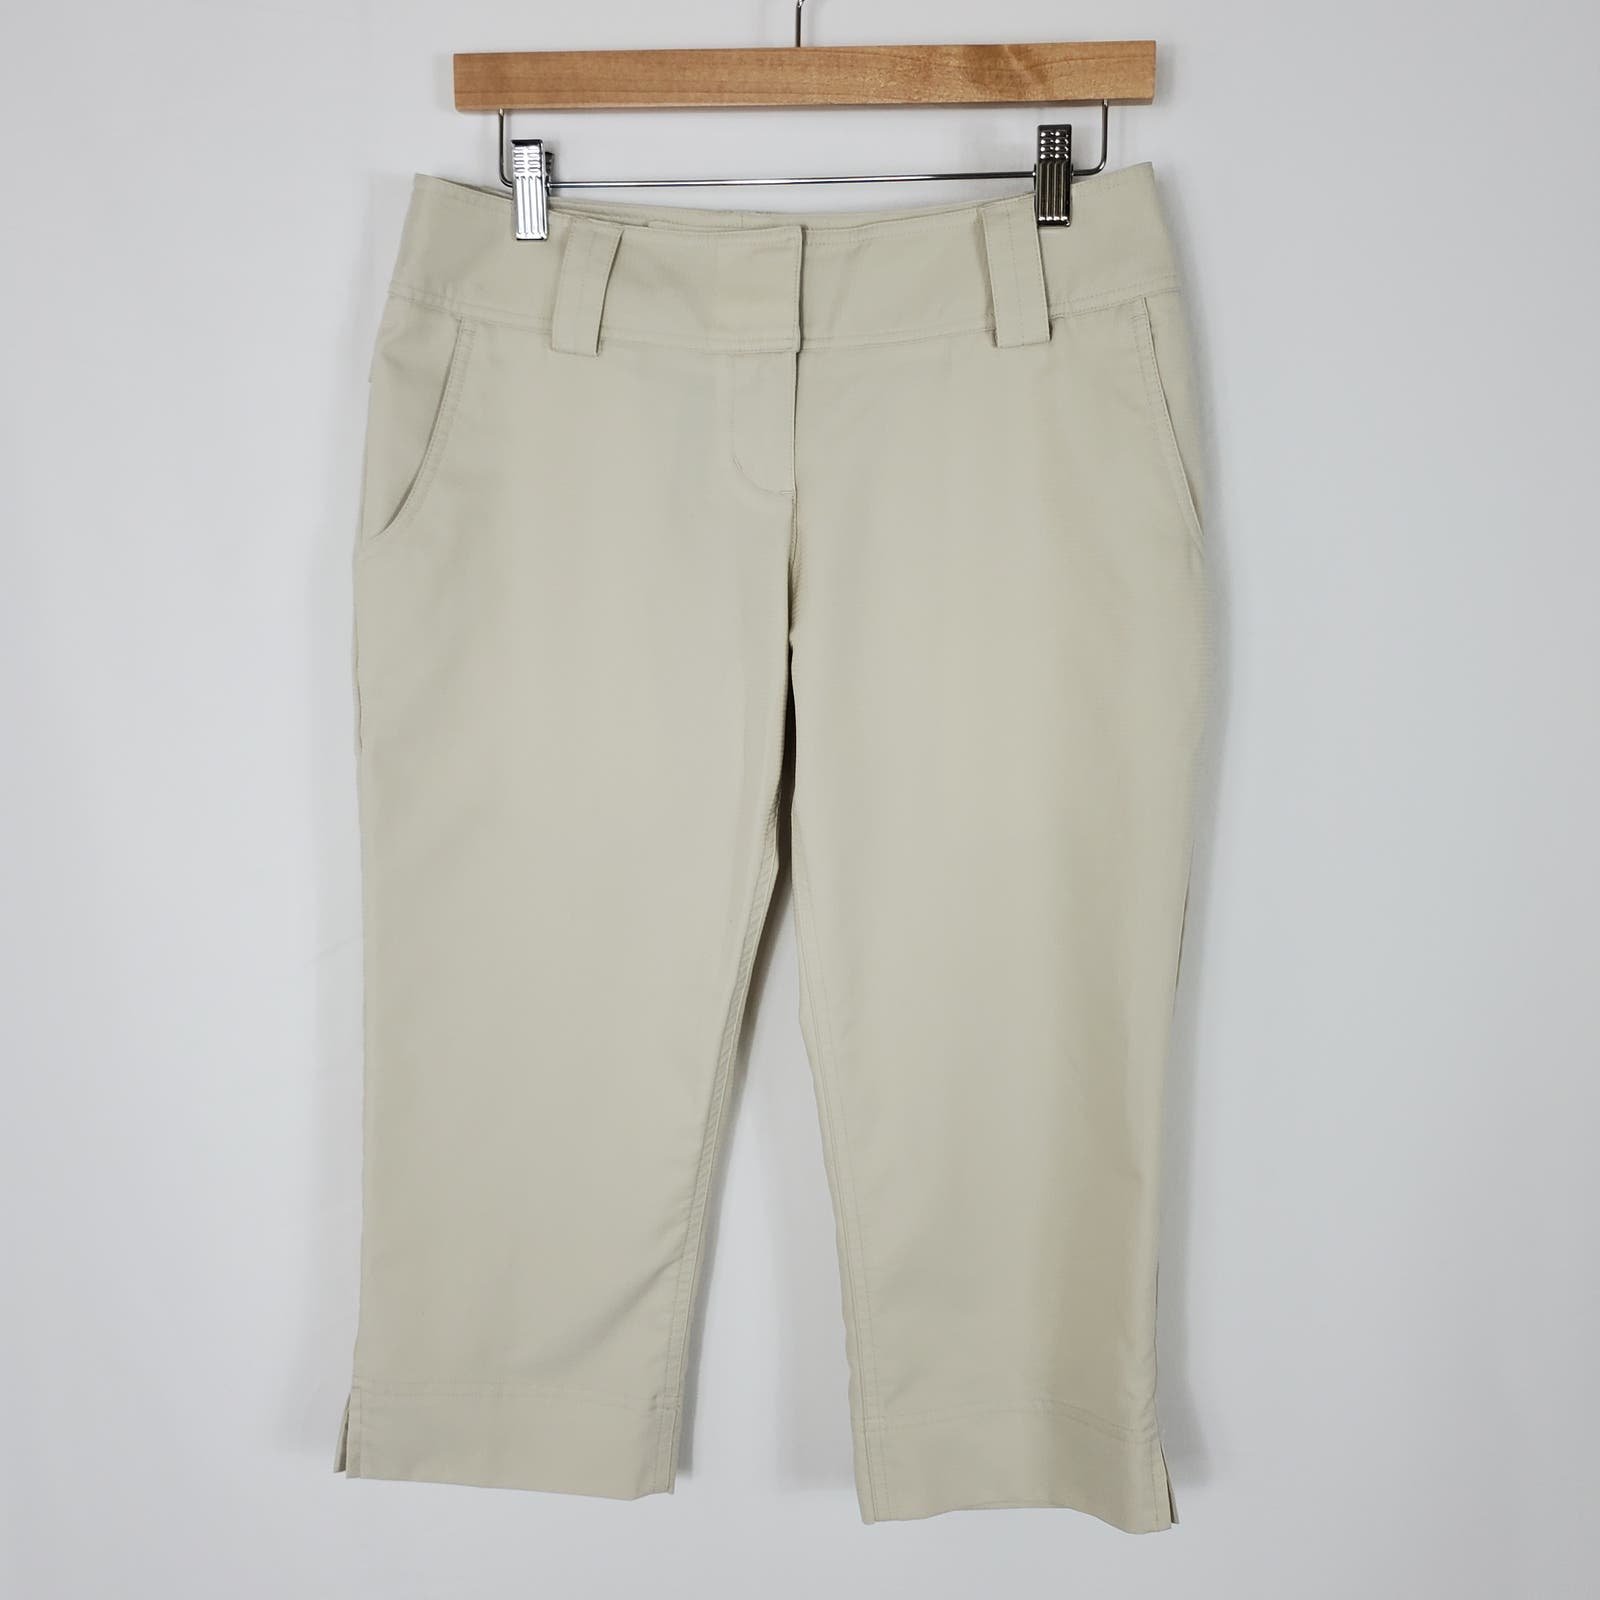 big discount Adidas ClimaCool Cream Athletic Golf Cropped Capri Pants Women´s Size 2 HoggYTcvQ Store Online